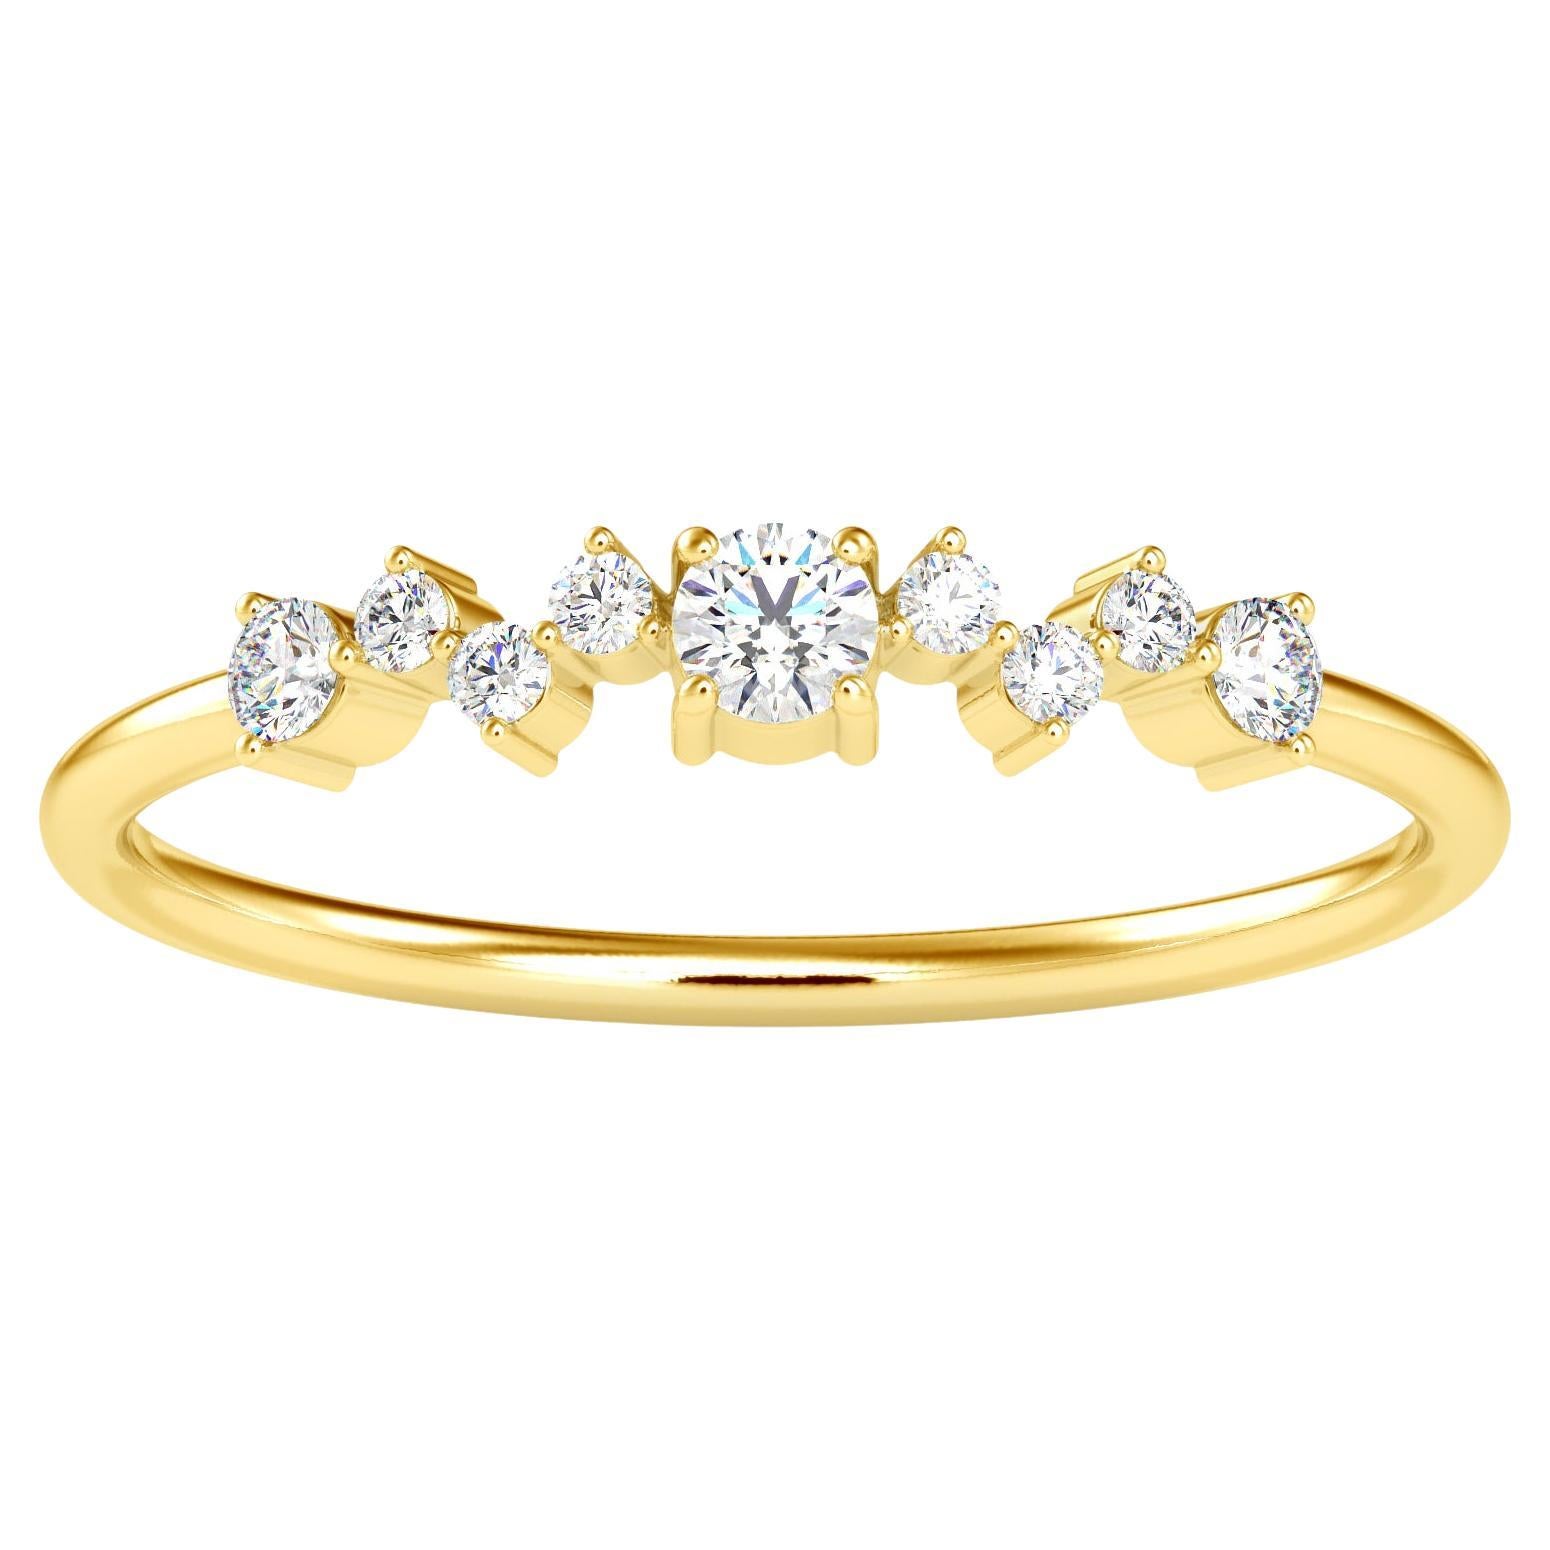 0.11 Carat Diamond 14K Yellow Gold Ring